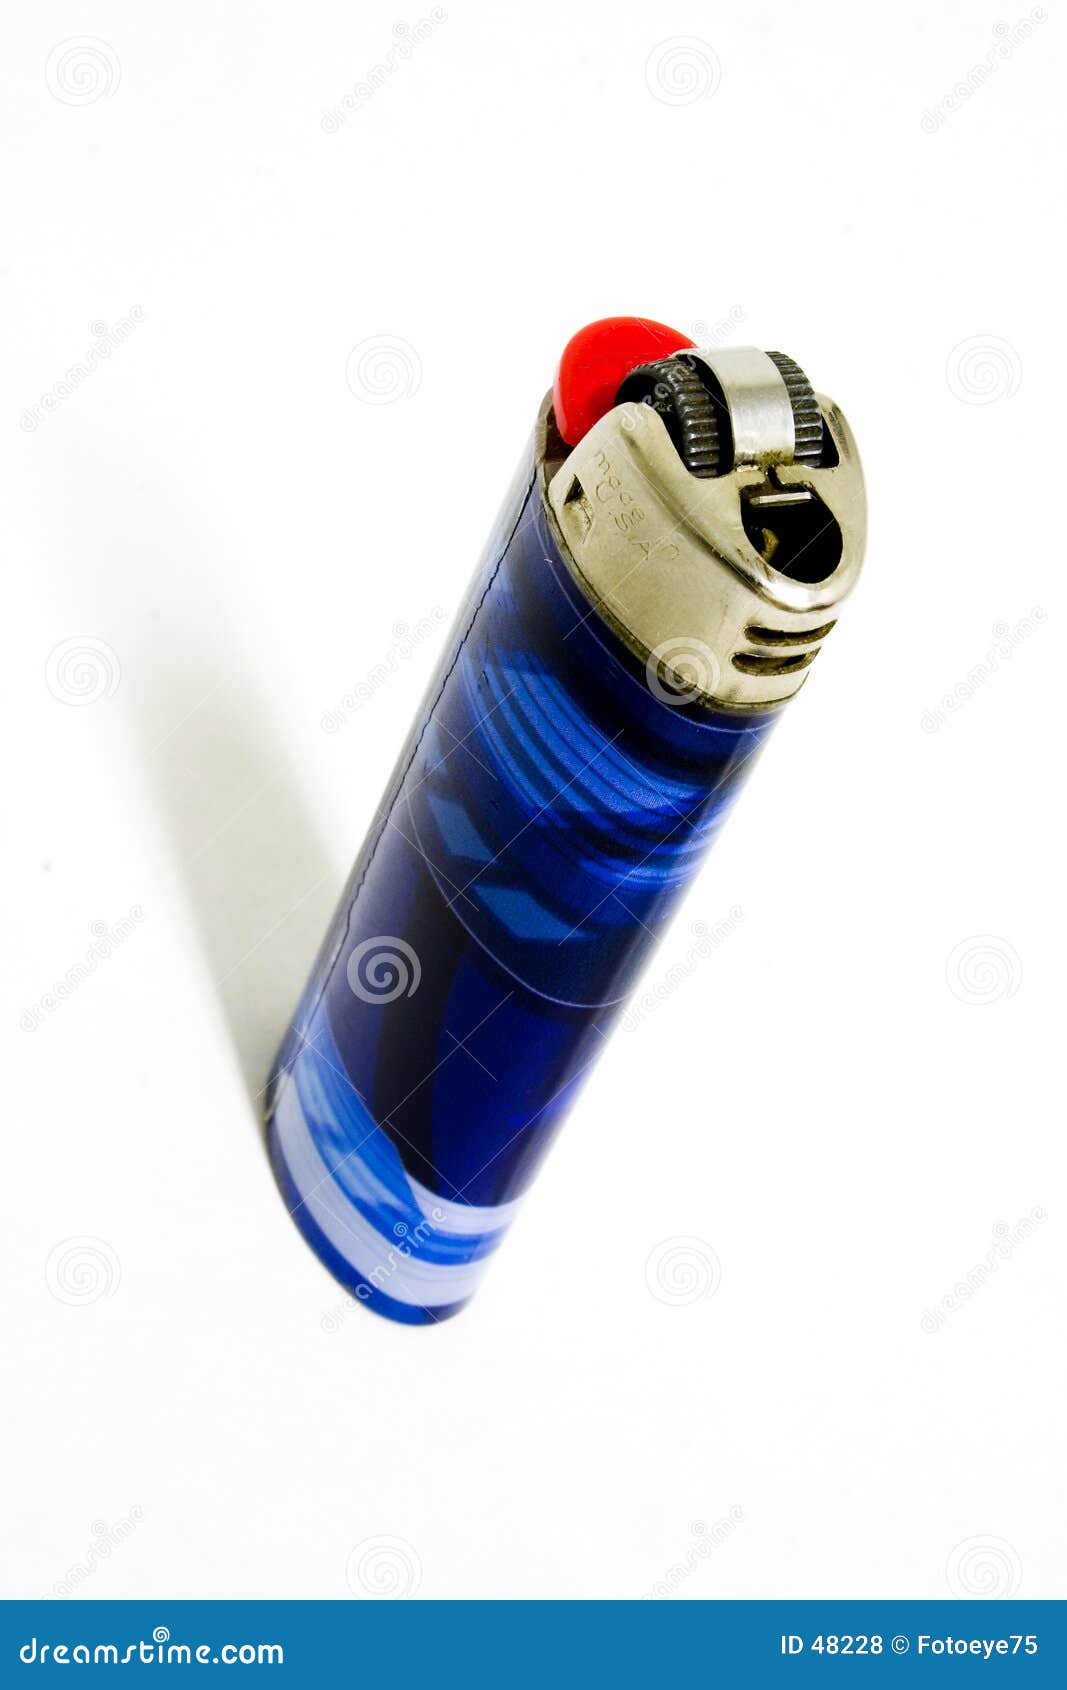 edgy blue lighter